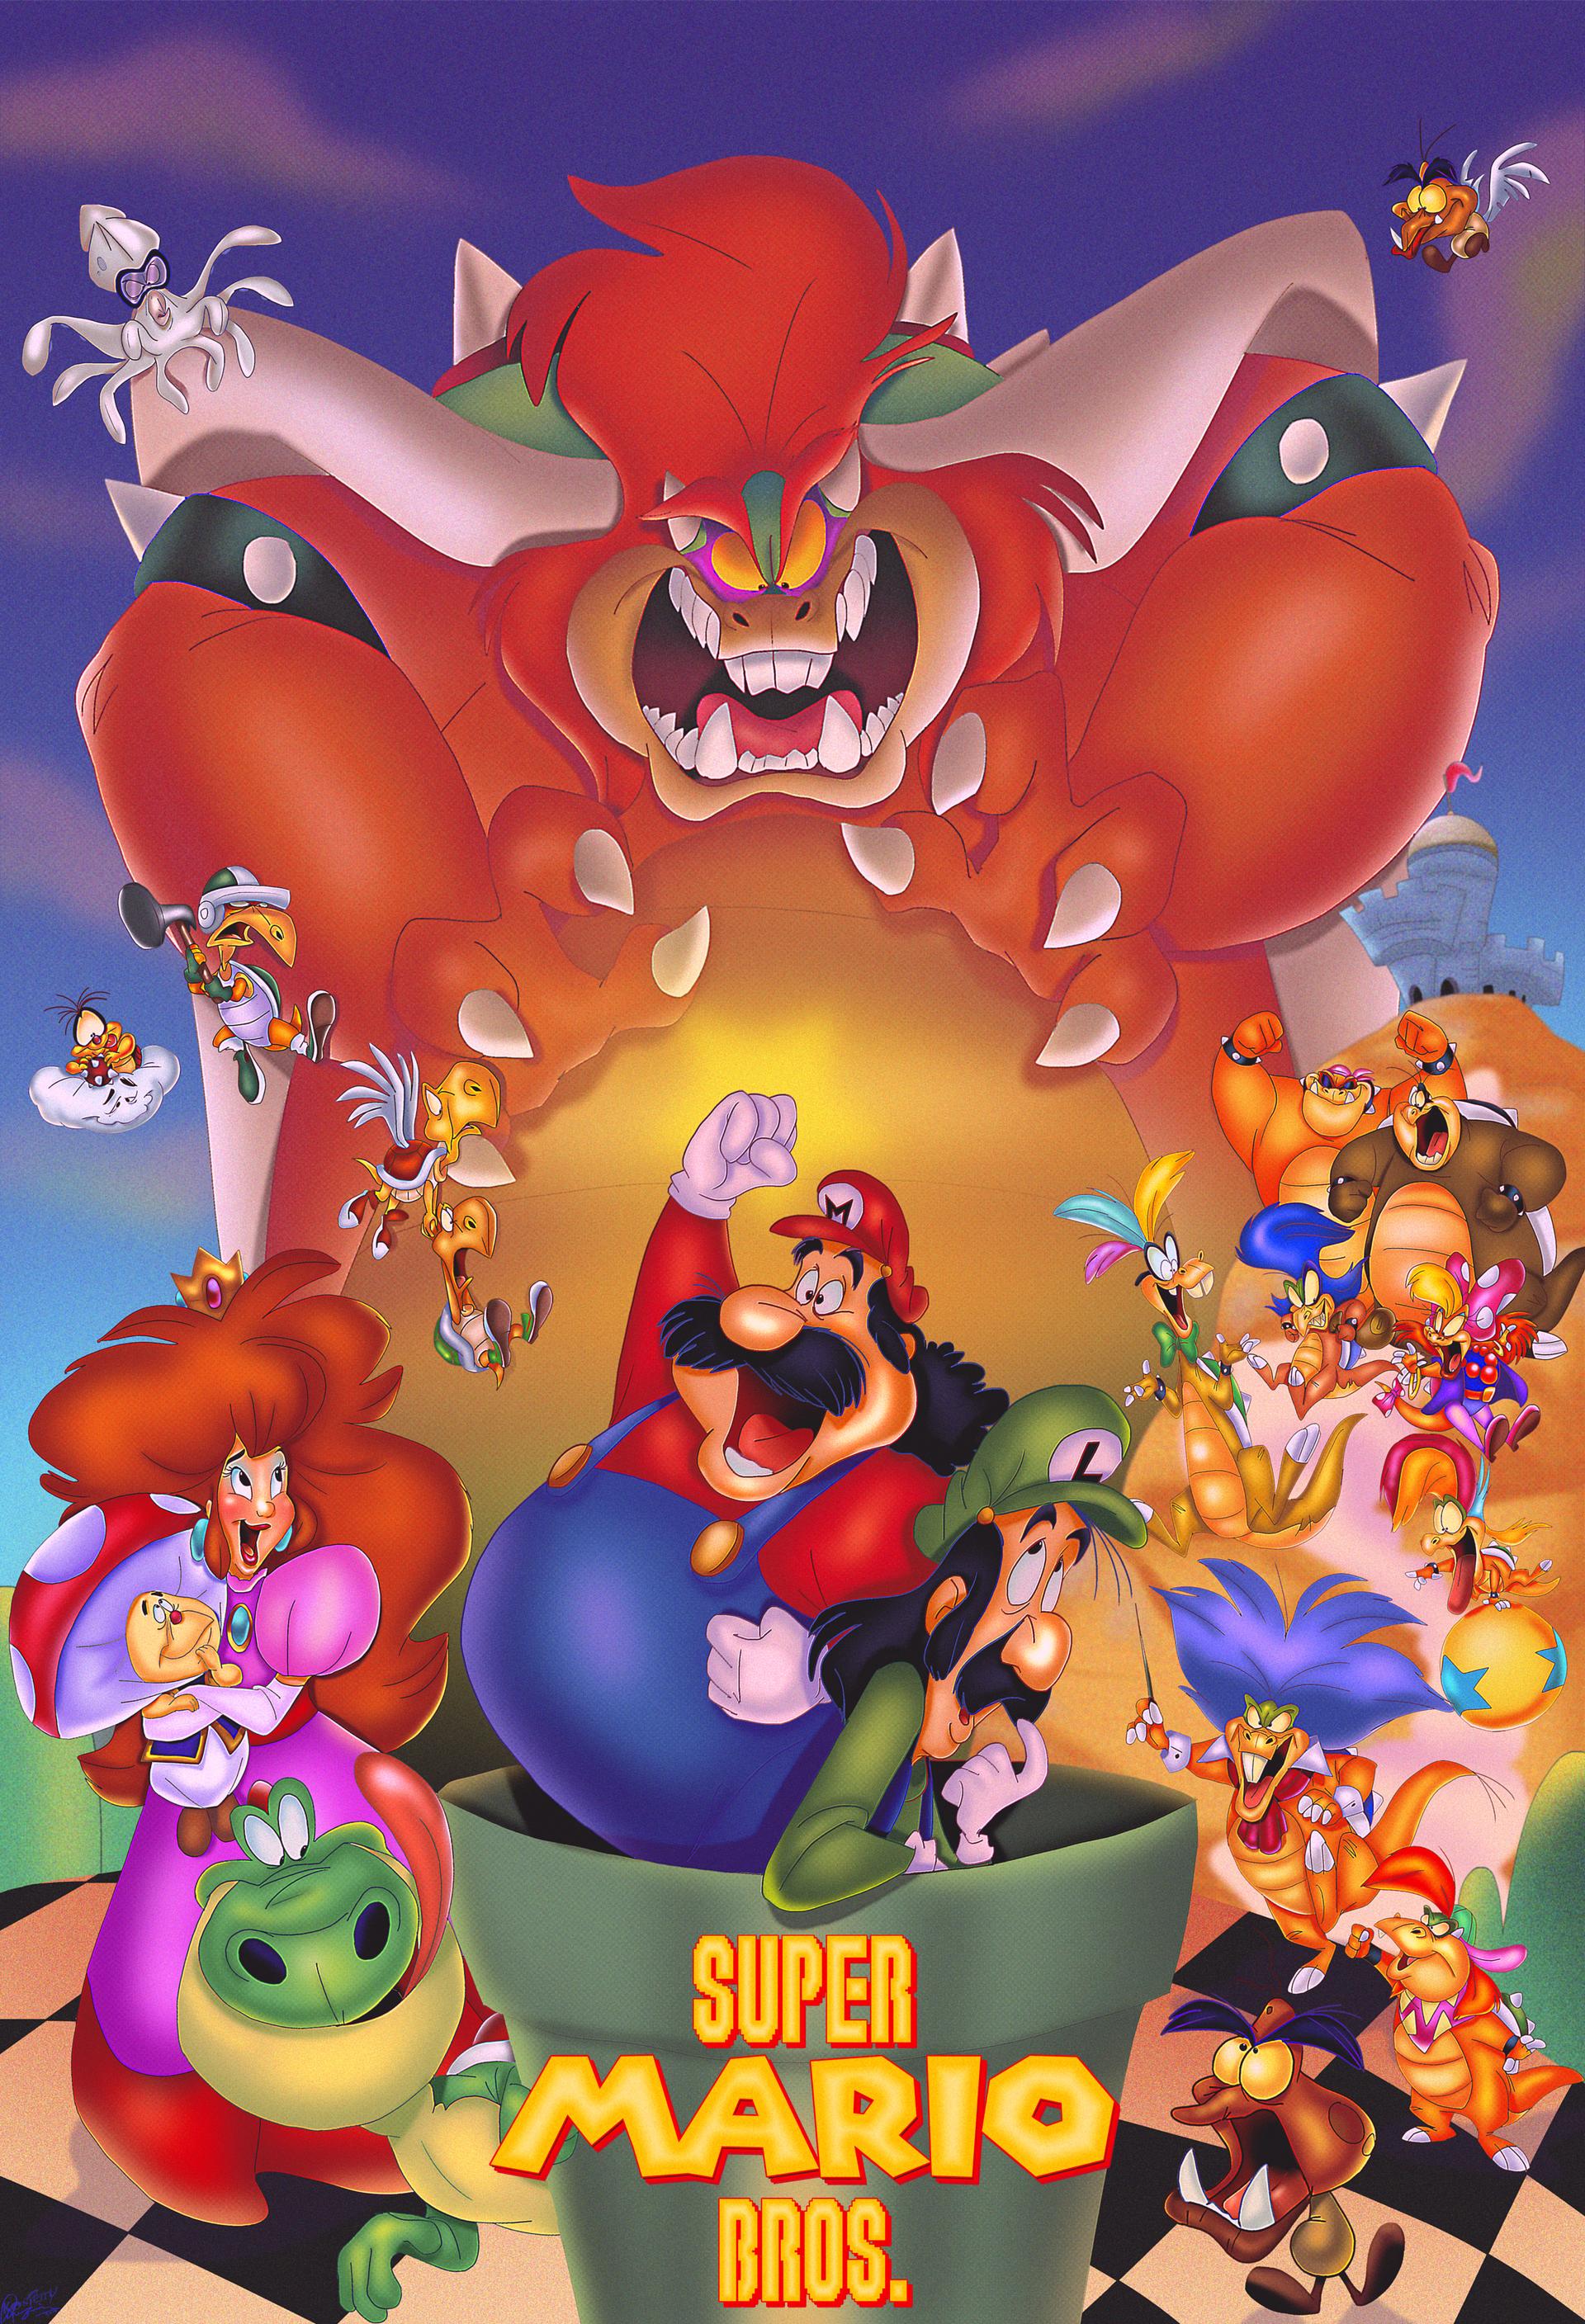 Medewerker Streng Mentaliteit Super Mario Bros. (1985 film) | Disney Fanon Wiki | Fandom